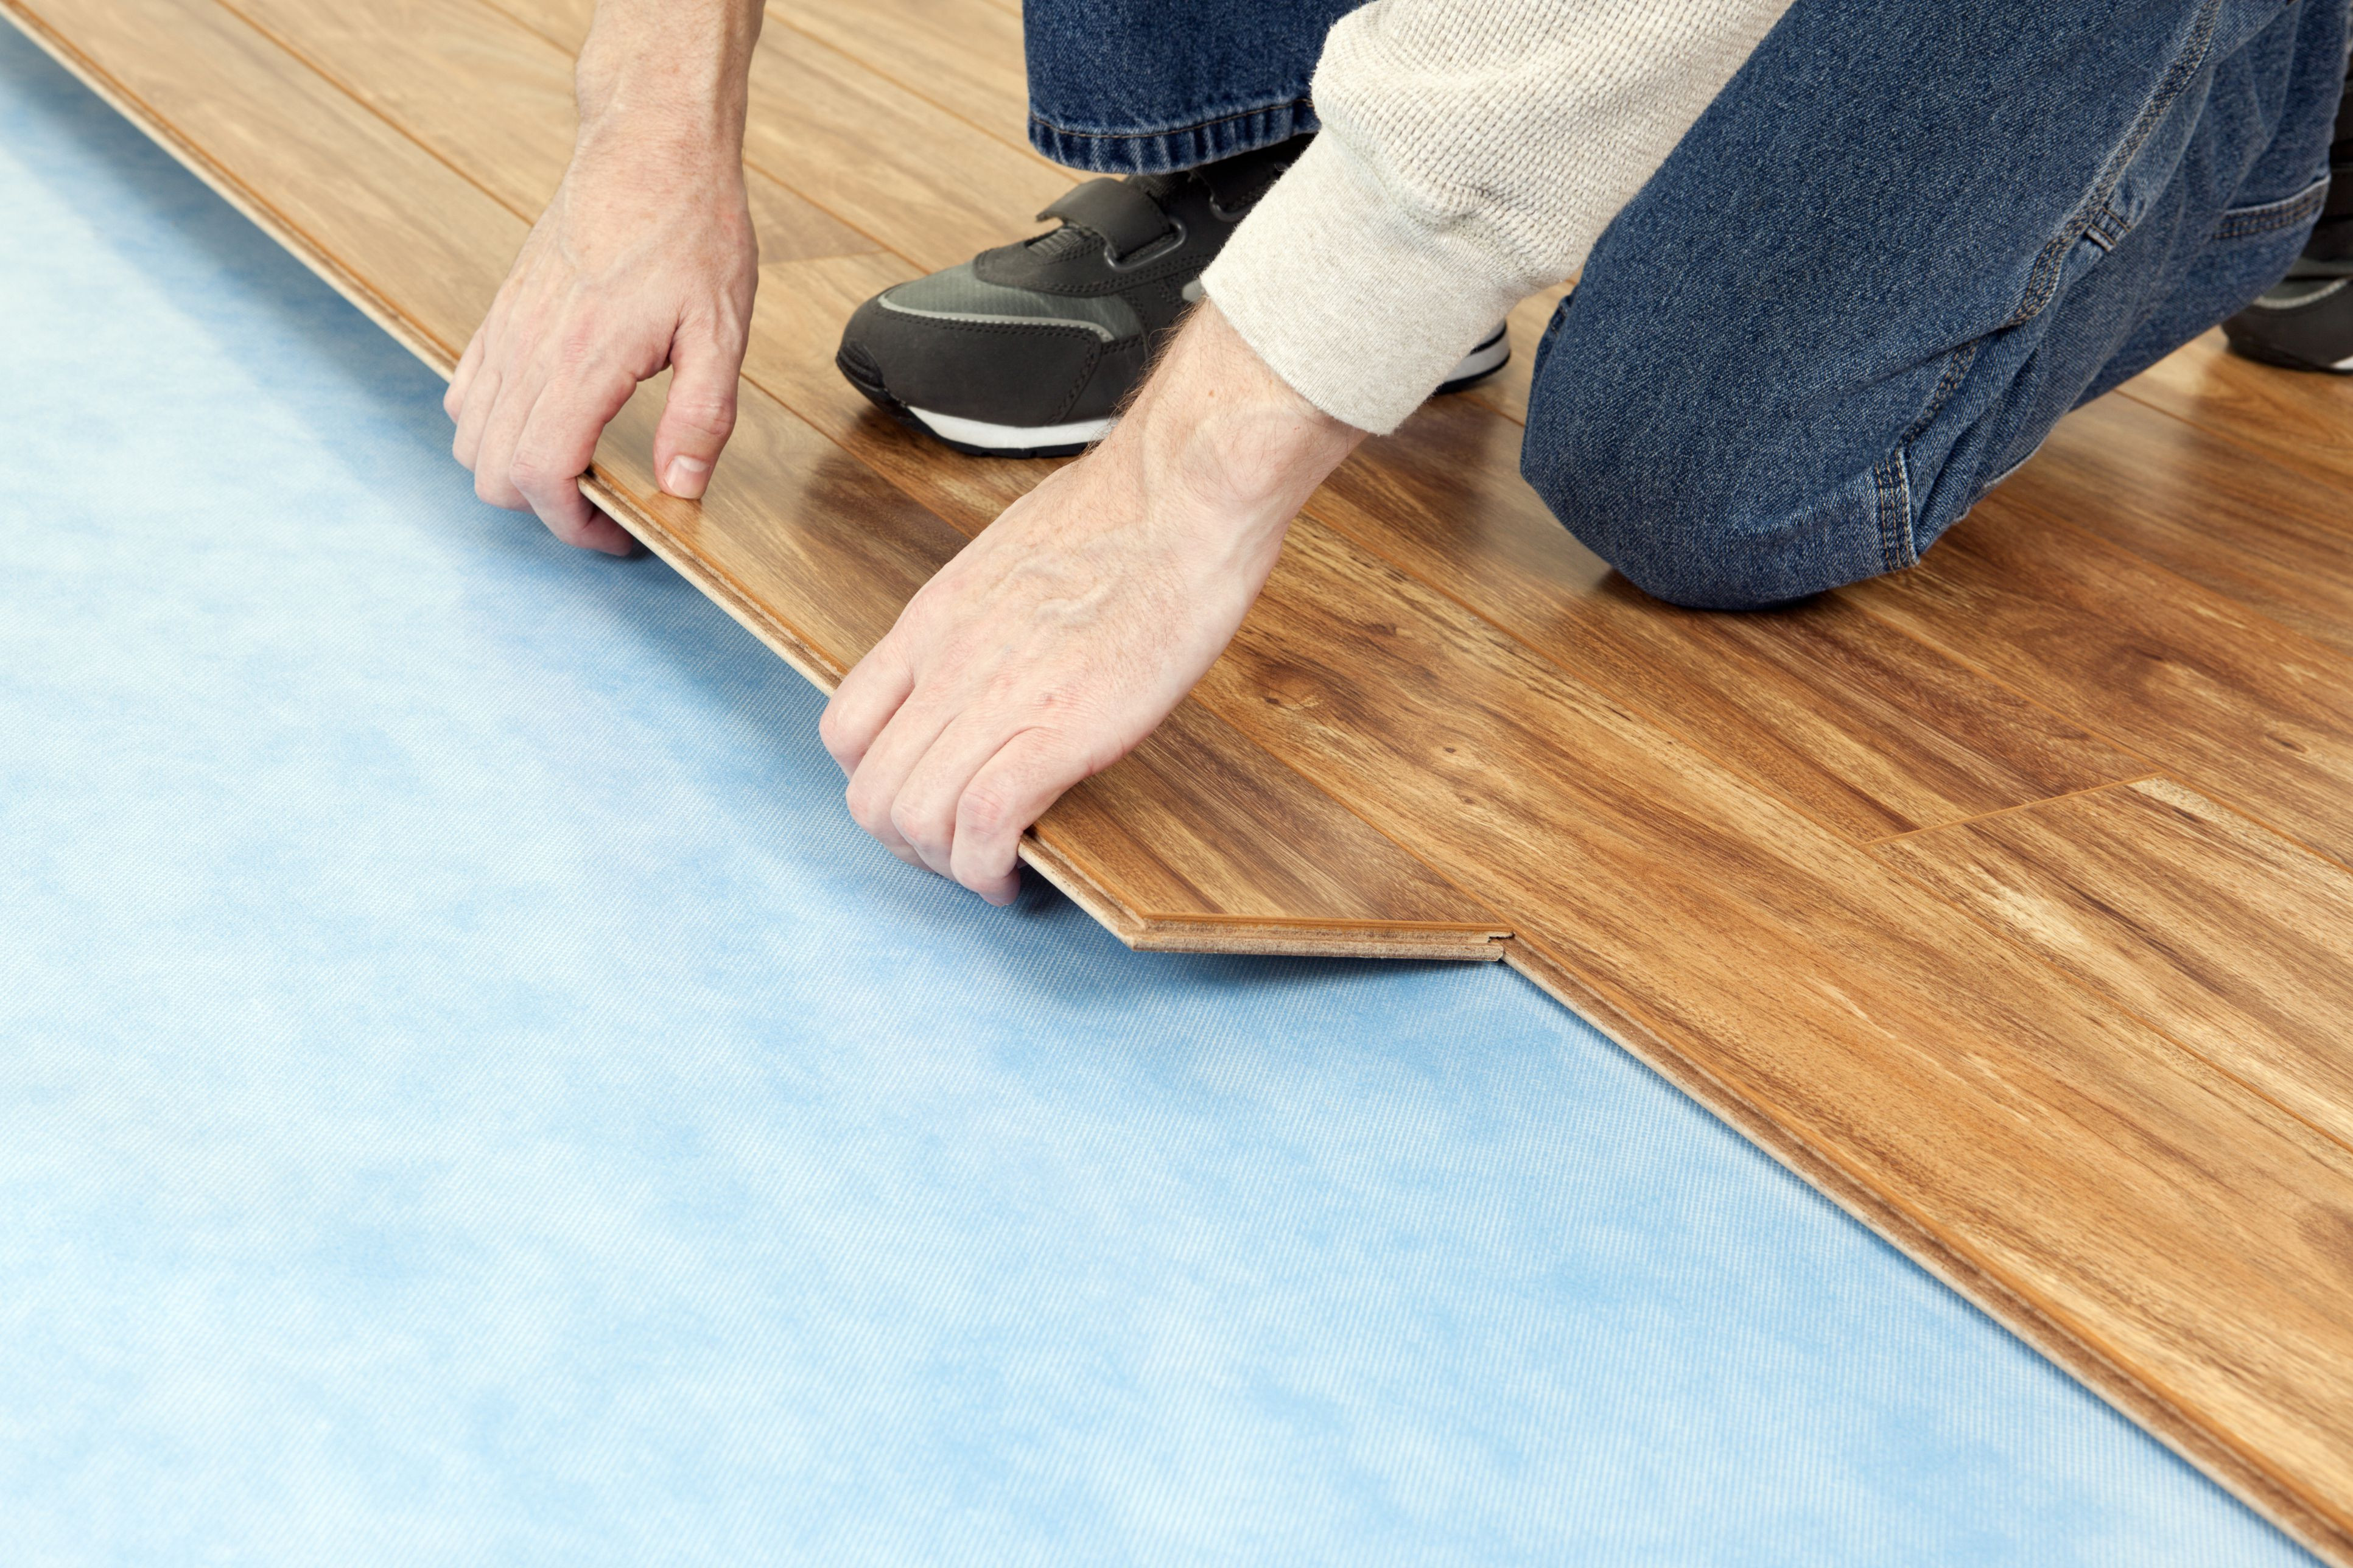 hardwood flooring edge types of flooring underlayment the basics inside new floor installation 185270632 582b722c3df78c6f6af0a8ab